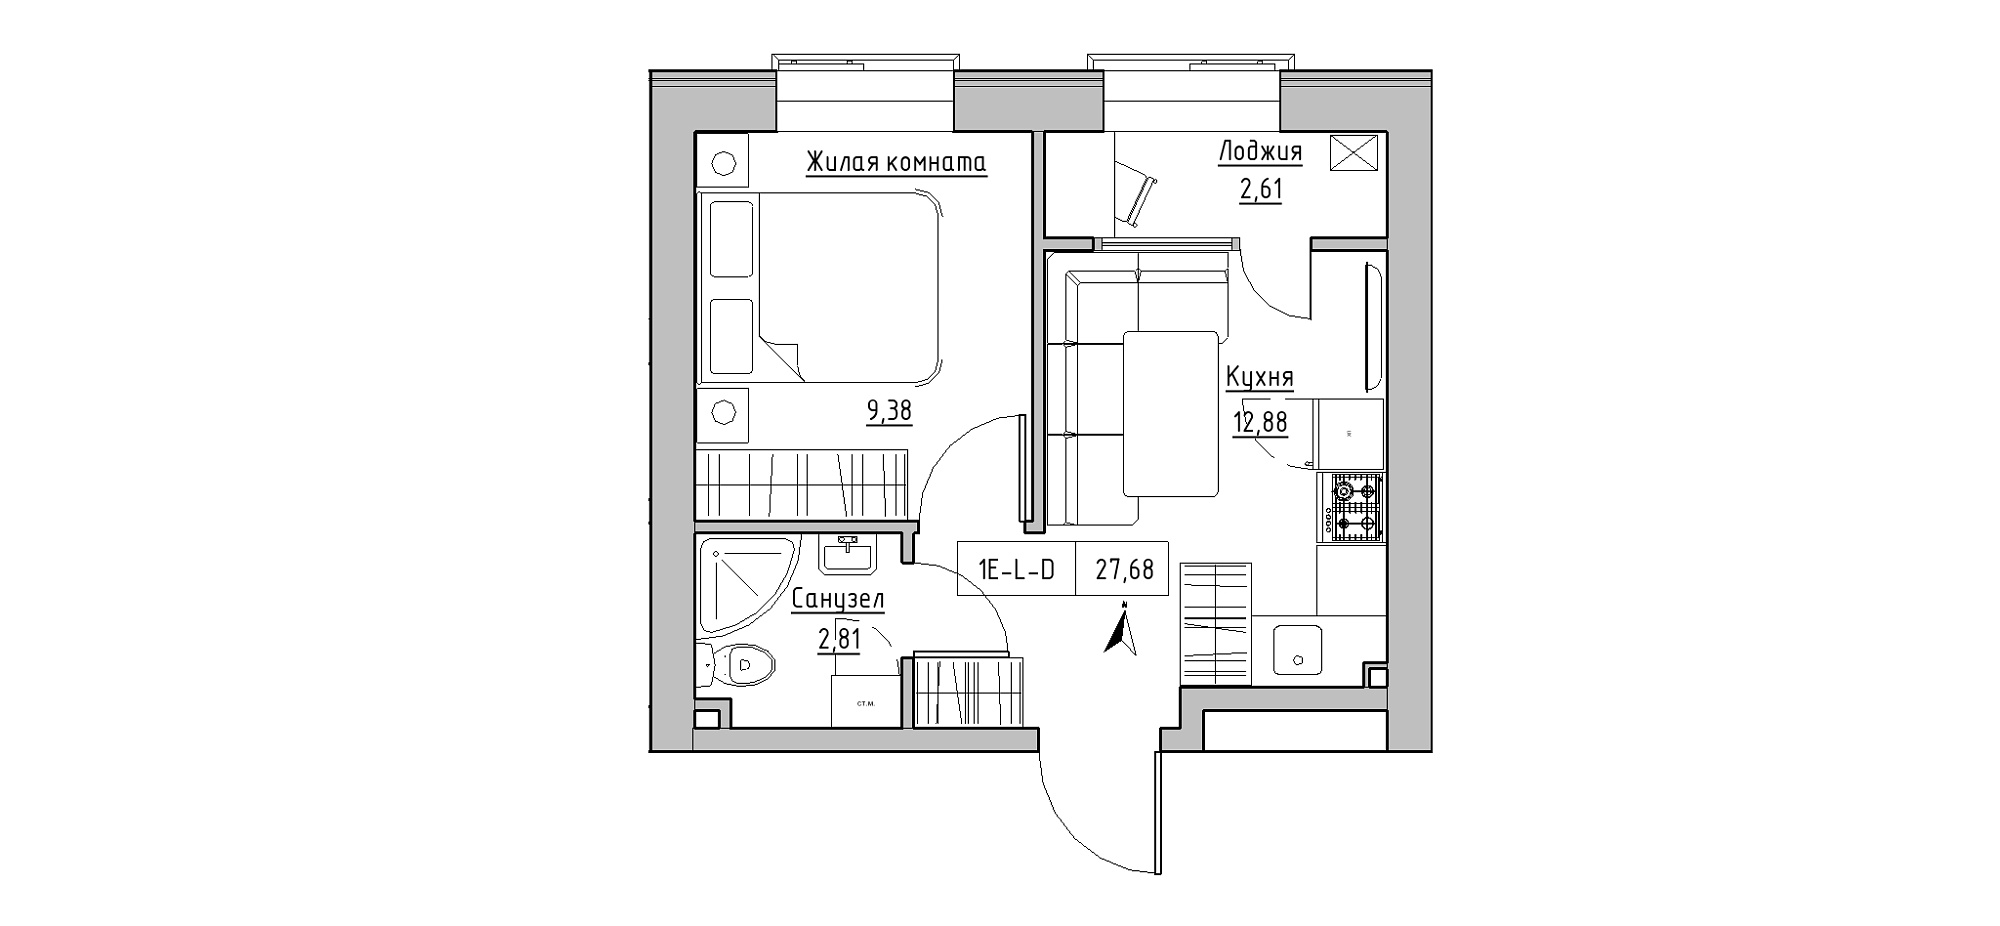 Planning 1-rm flats area 27.68m2, KS-020-04/0001.